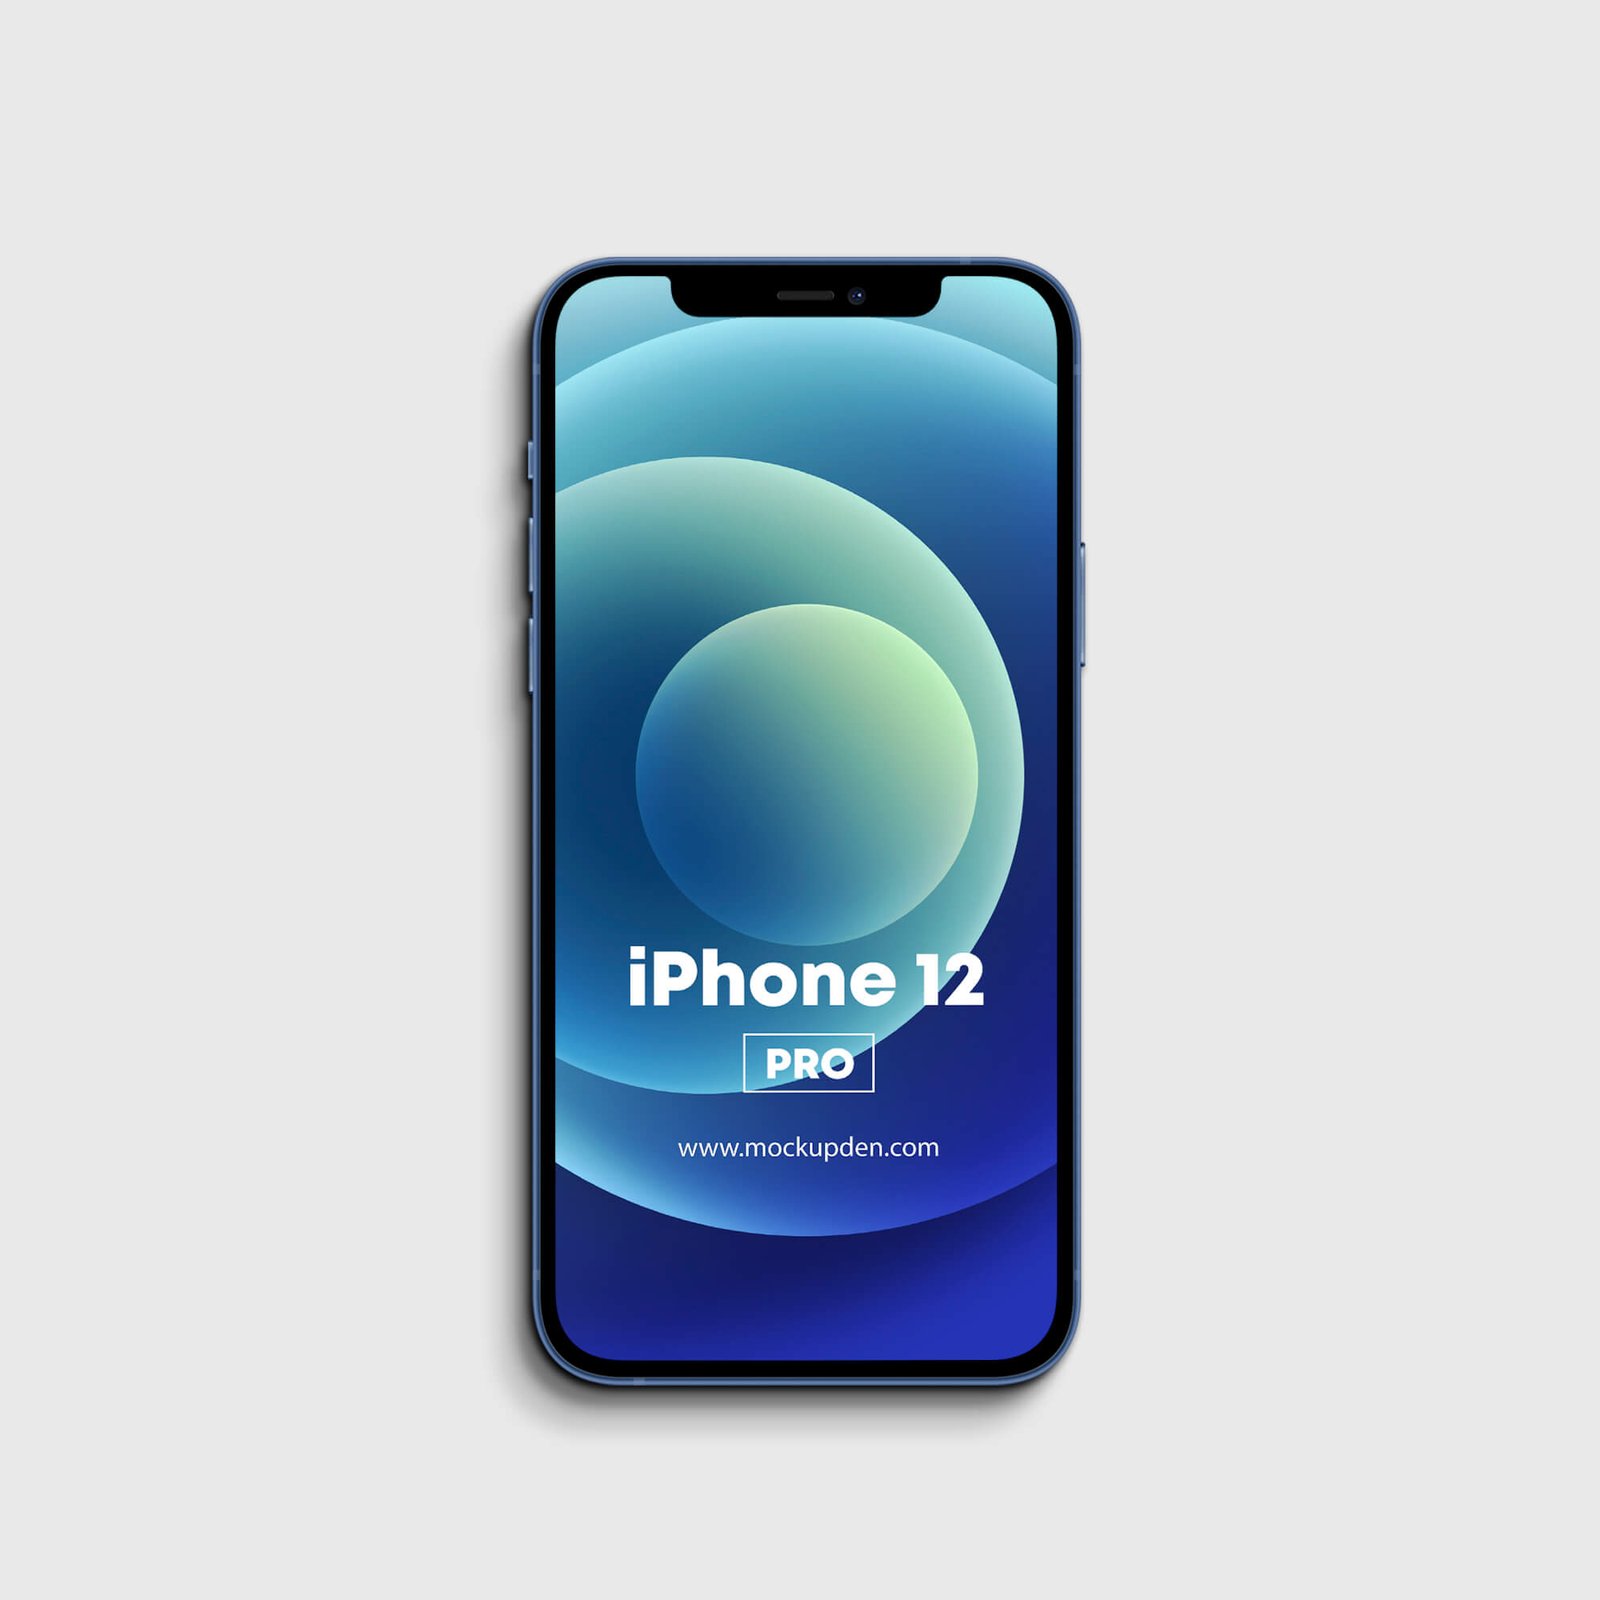 Design Free iPhone 12 Pro Mockup PSD Template